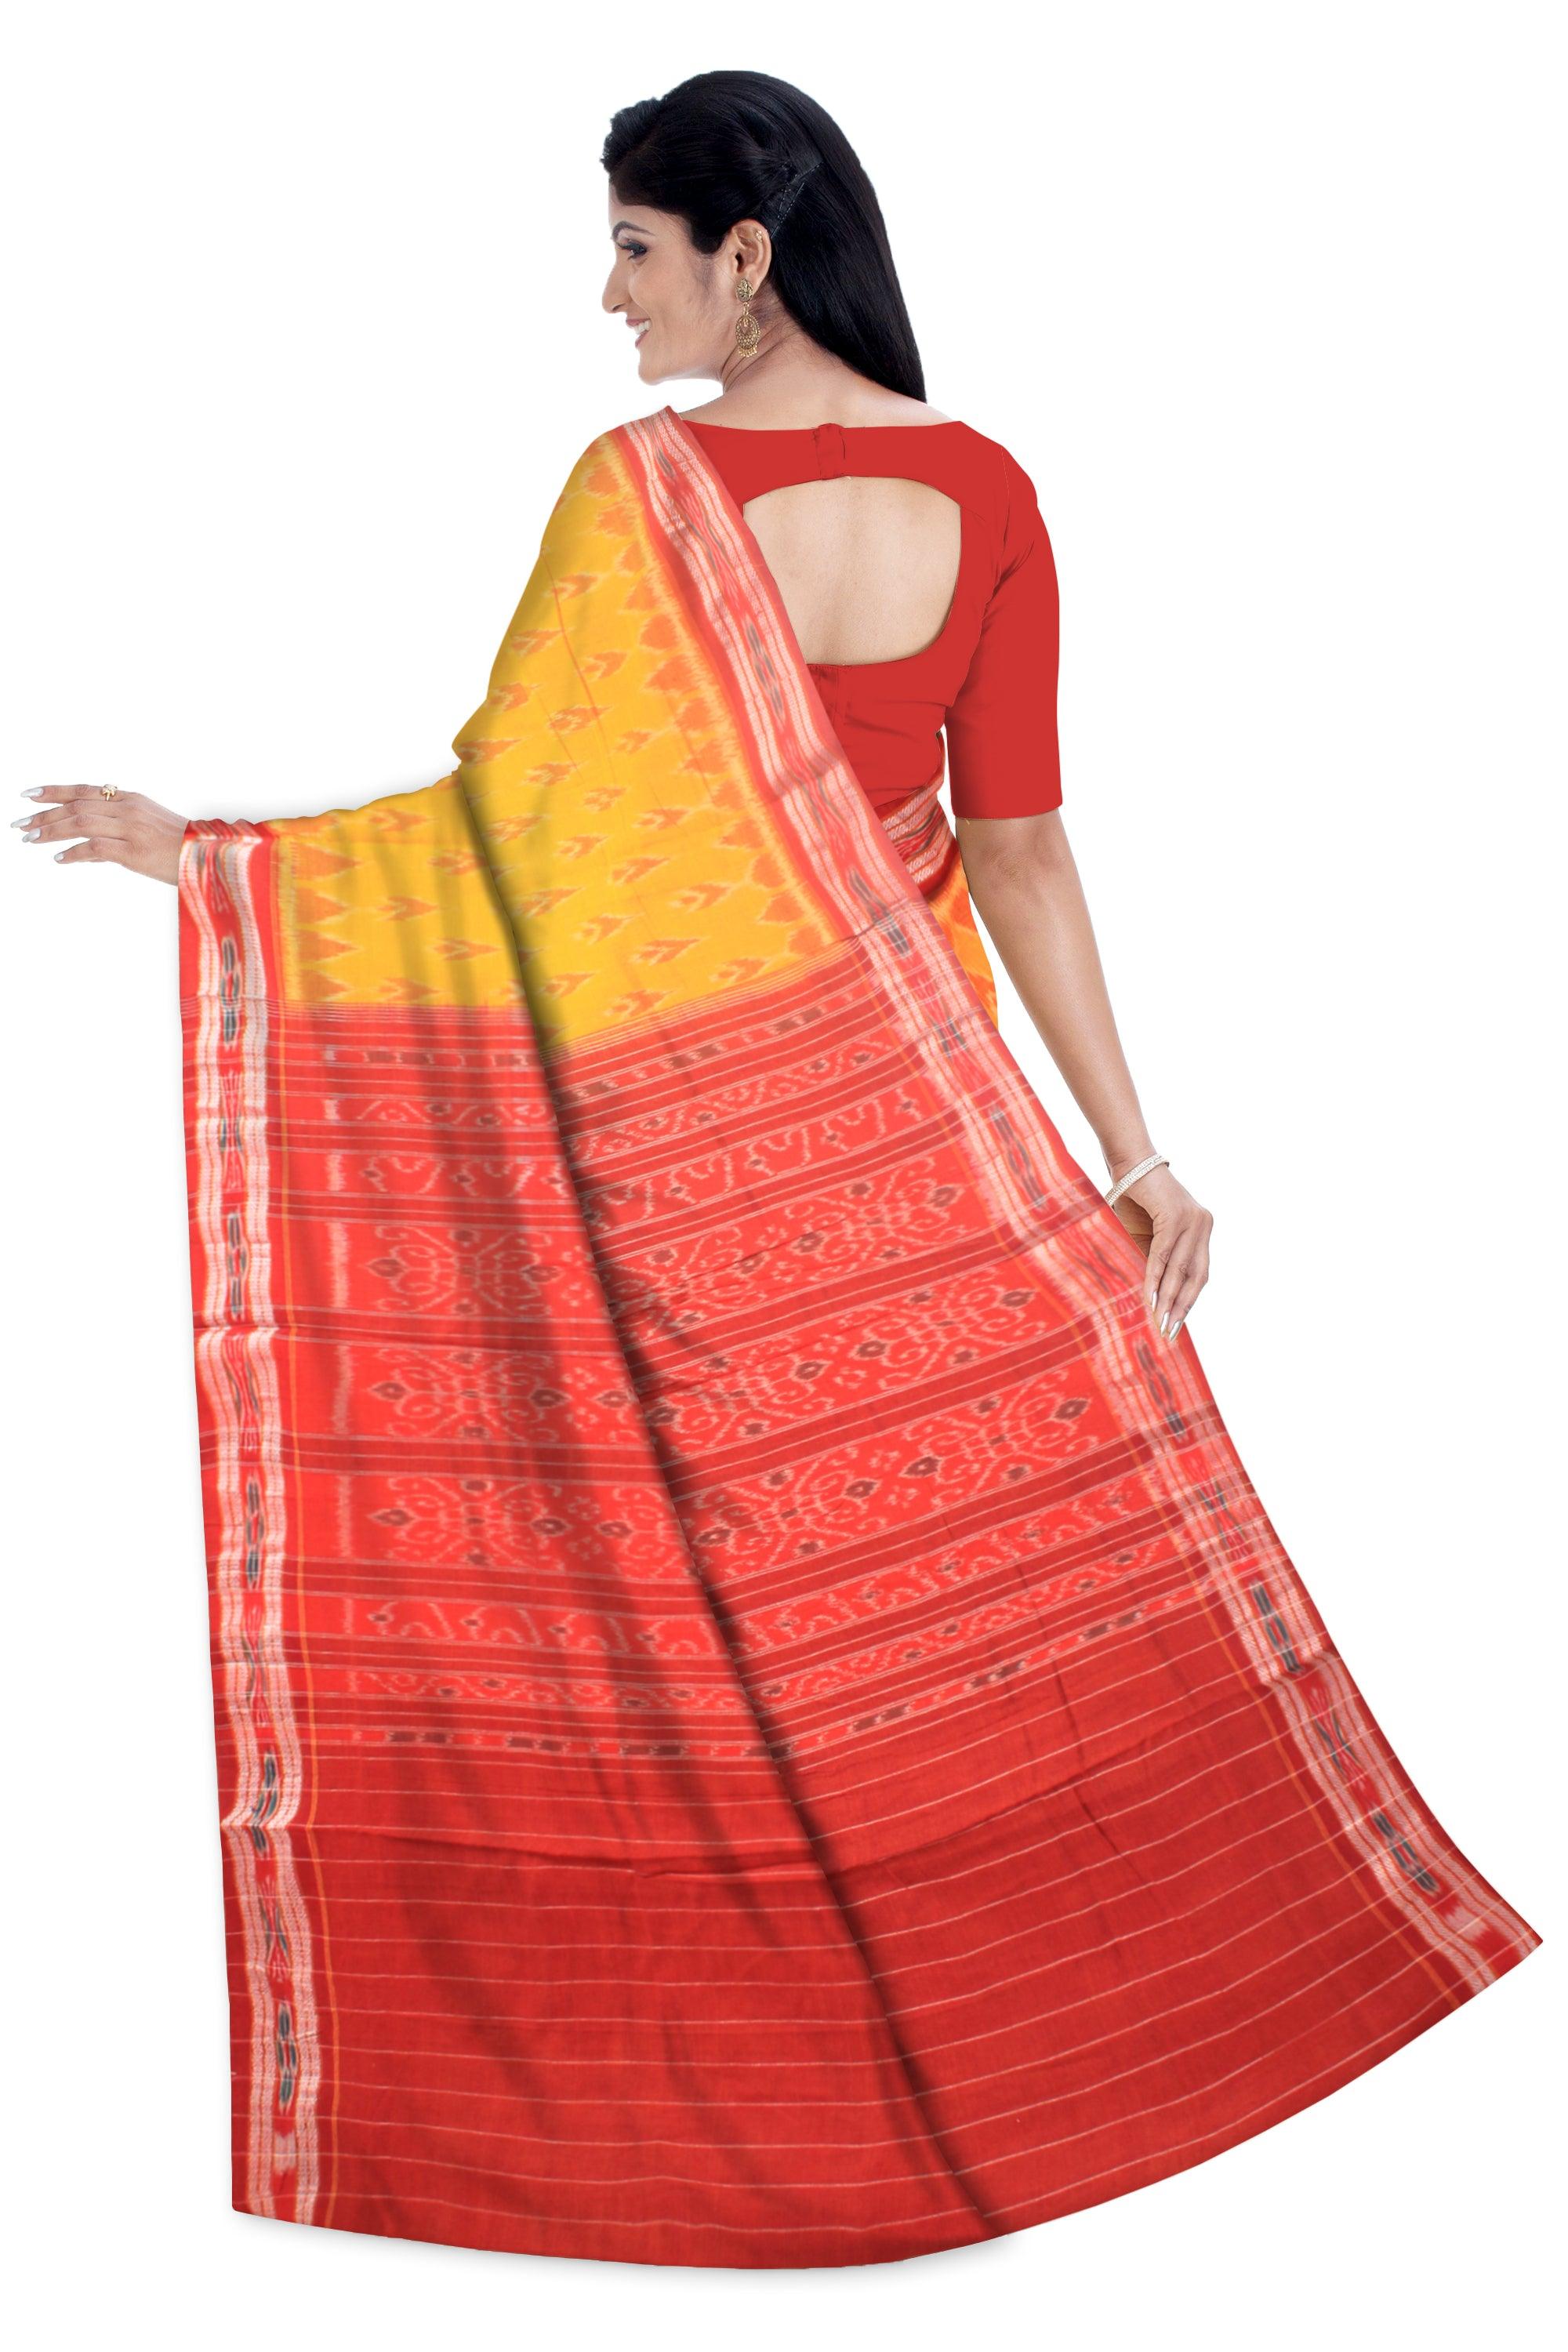 Sambalpuri Cotton saree in  Yellow and Red color - Koshali Arts & Crafts Enterprise